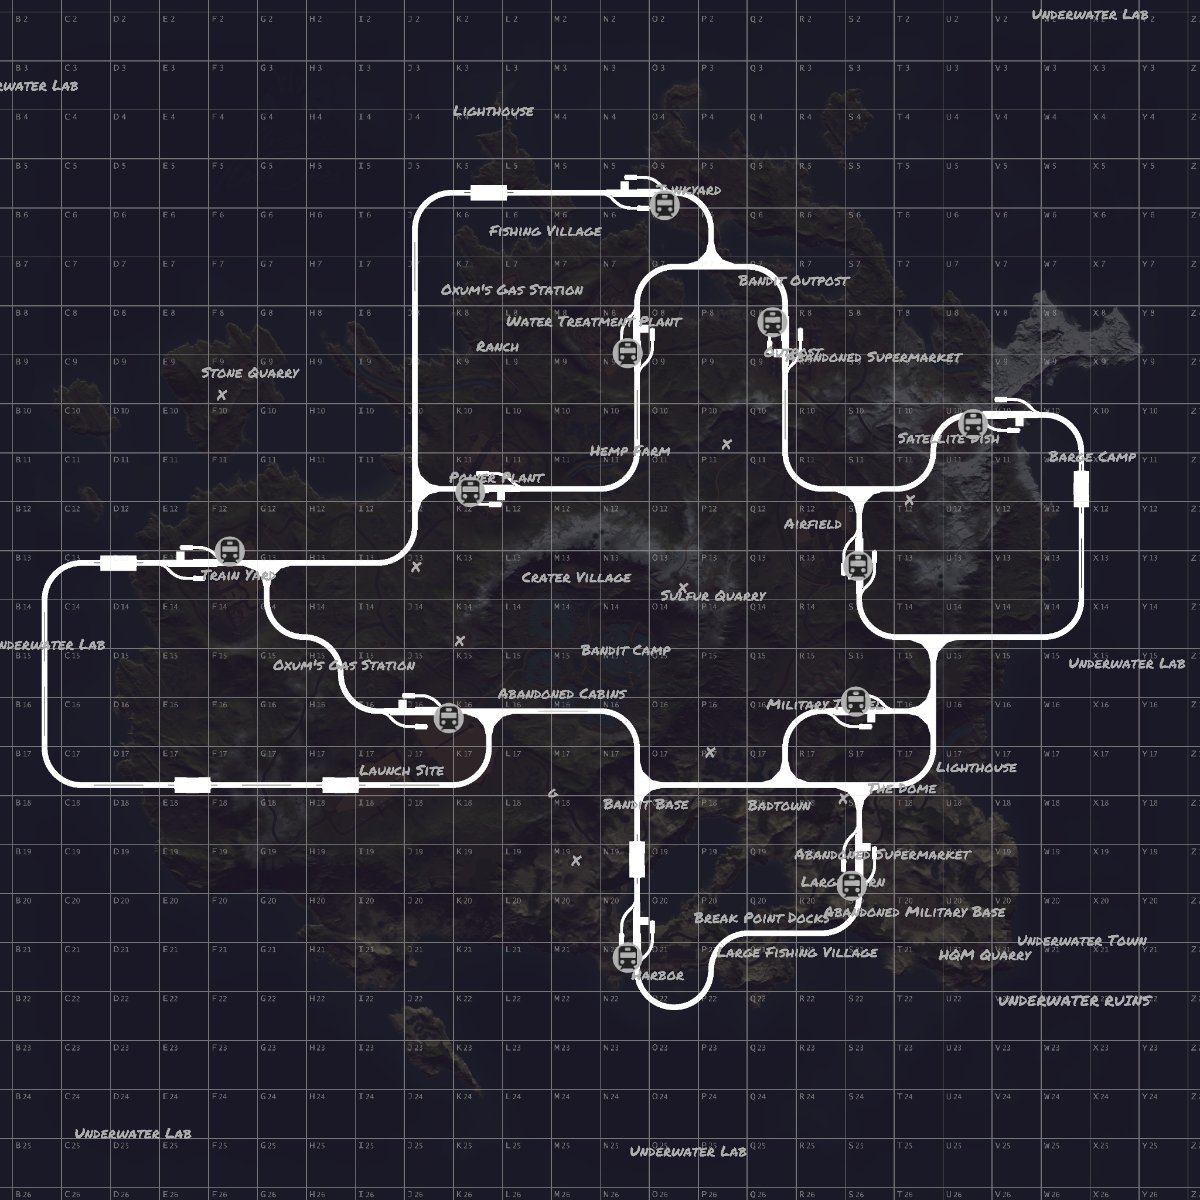 Paradise Island - Oyster bay [Far Cry 3 in Rust] - Maps - Codefling